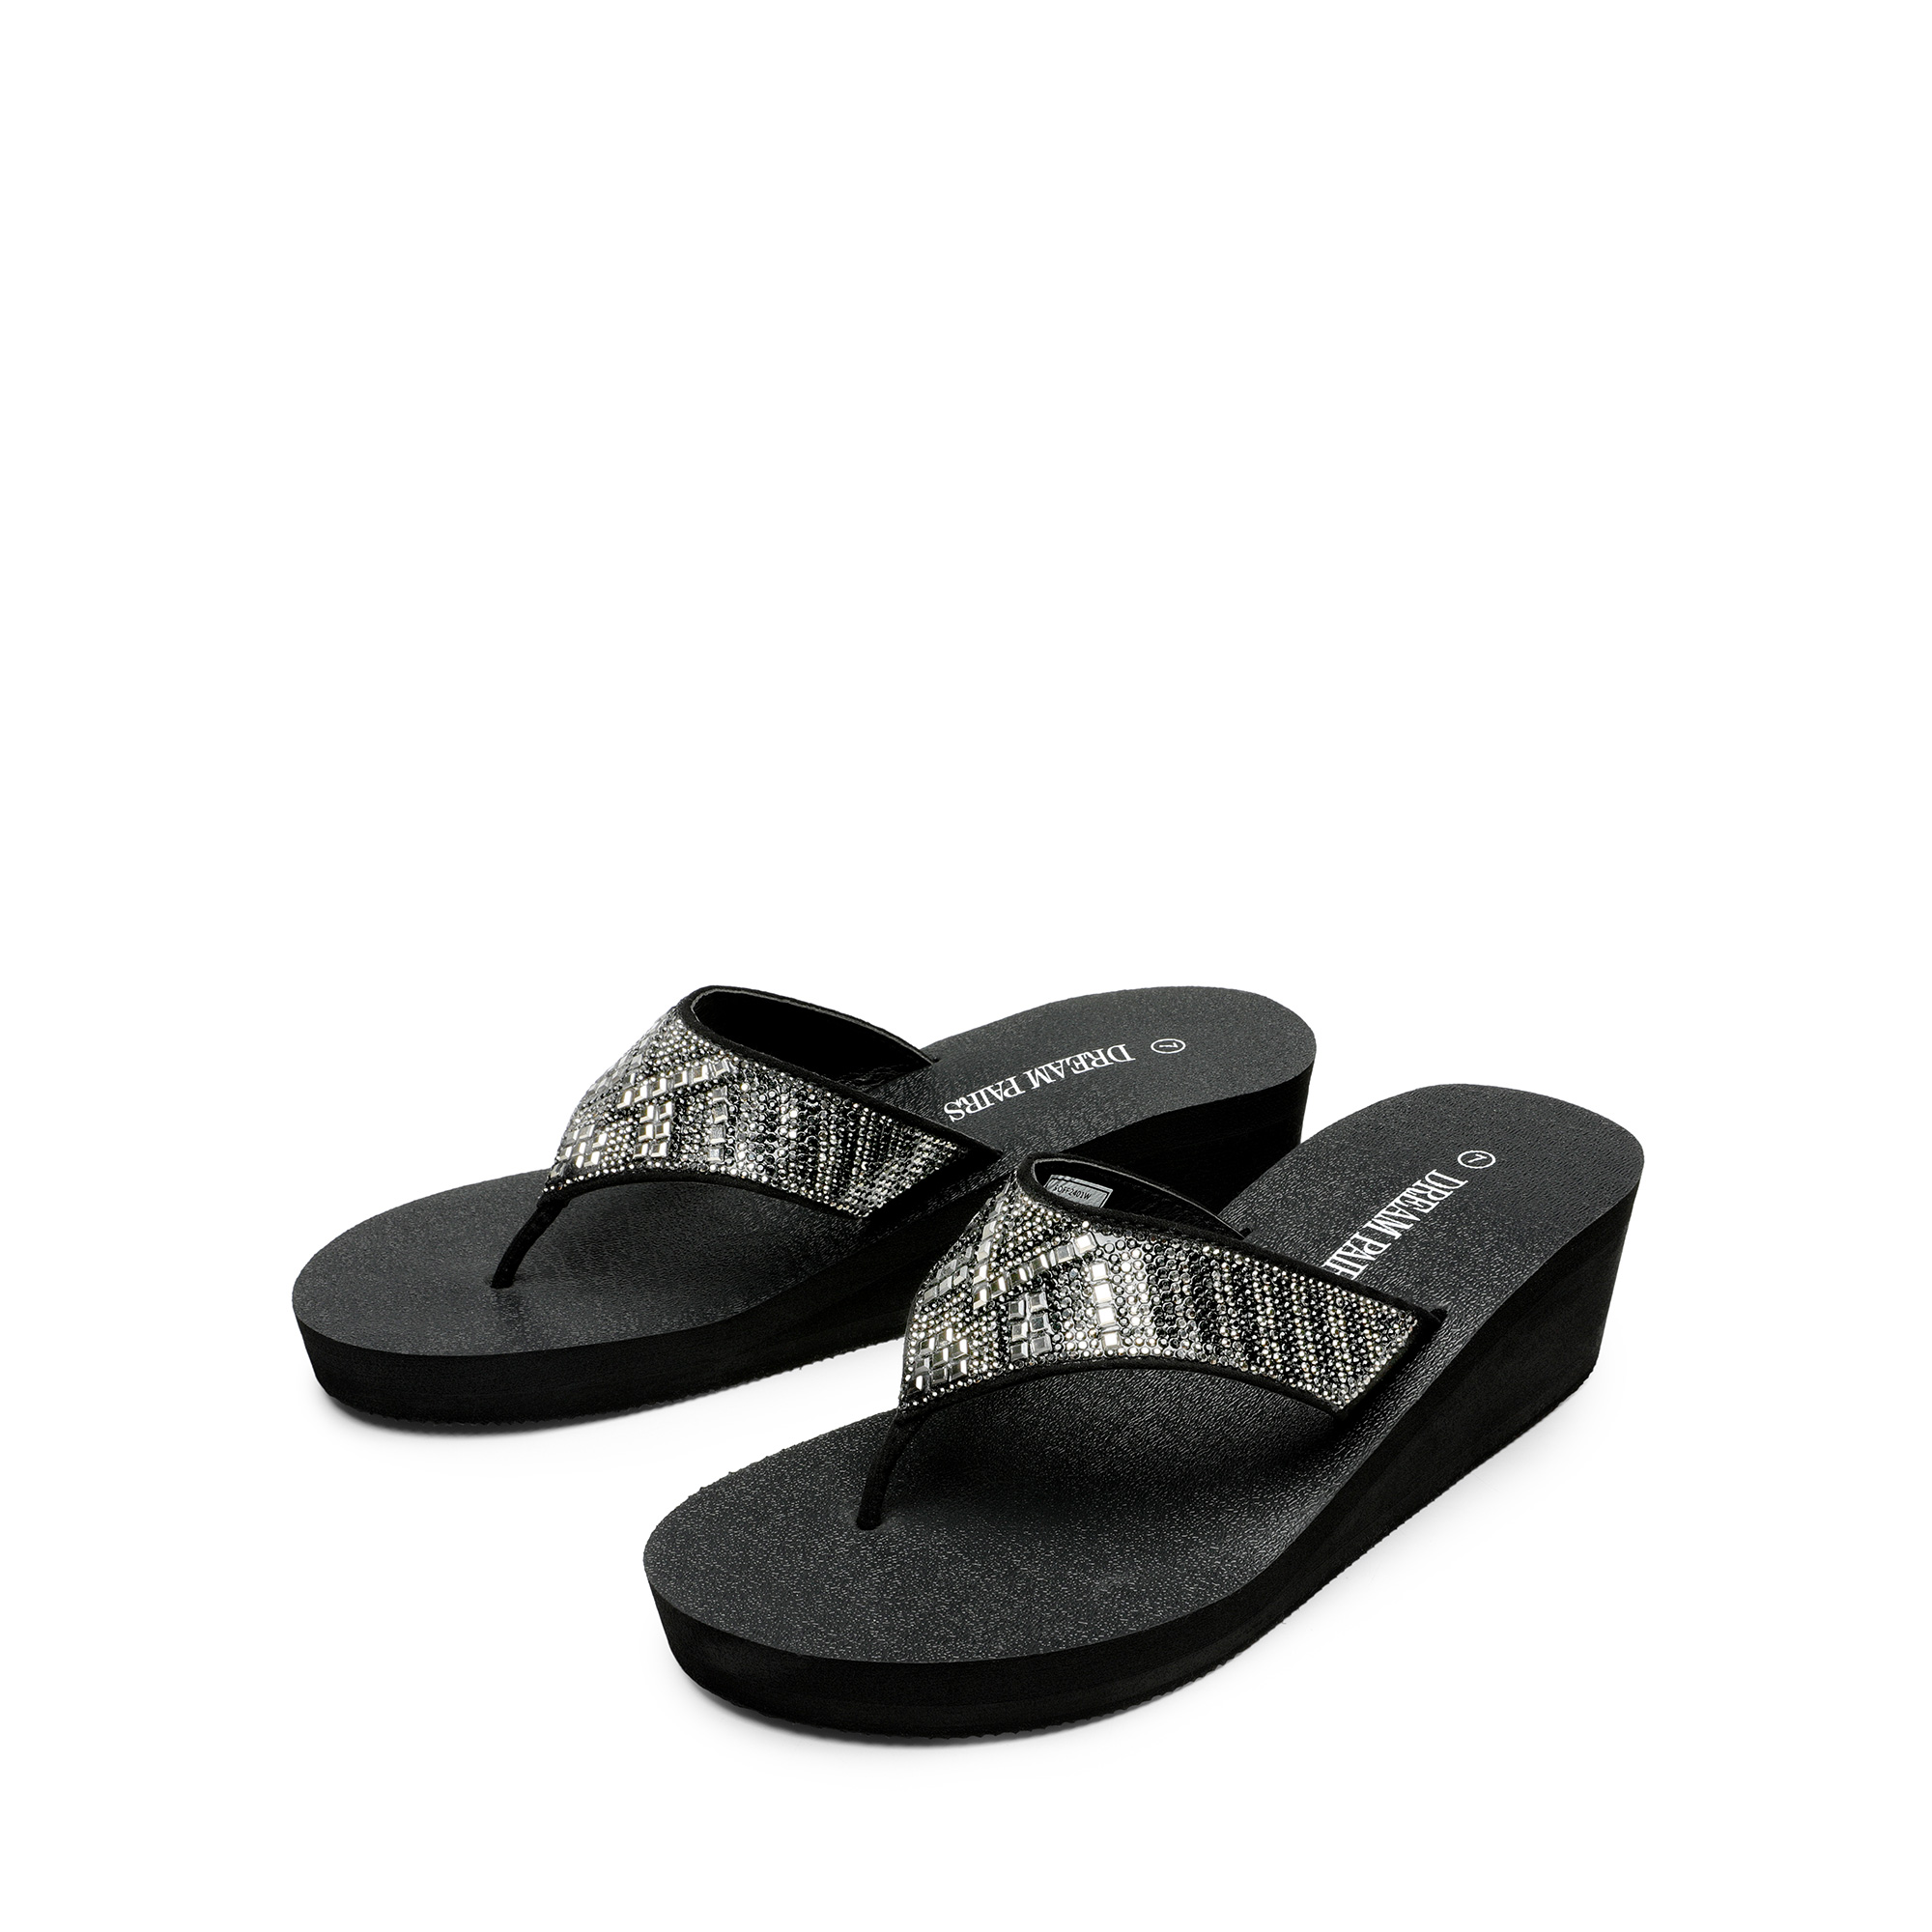 Slide Sandals Flip Flops for Womens Comfor Orthopedic Wedge Sandal with ...